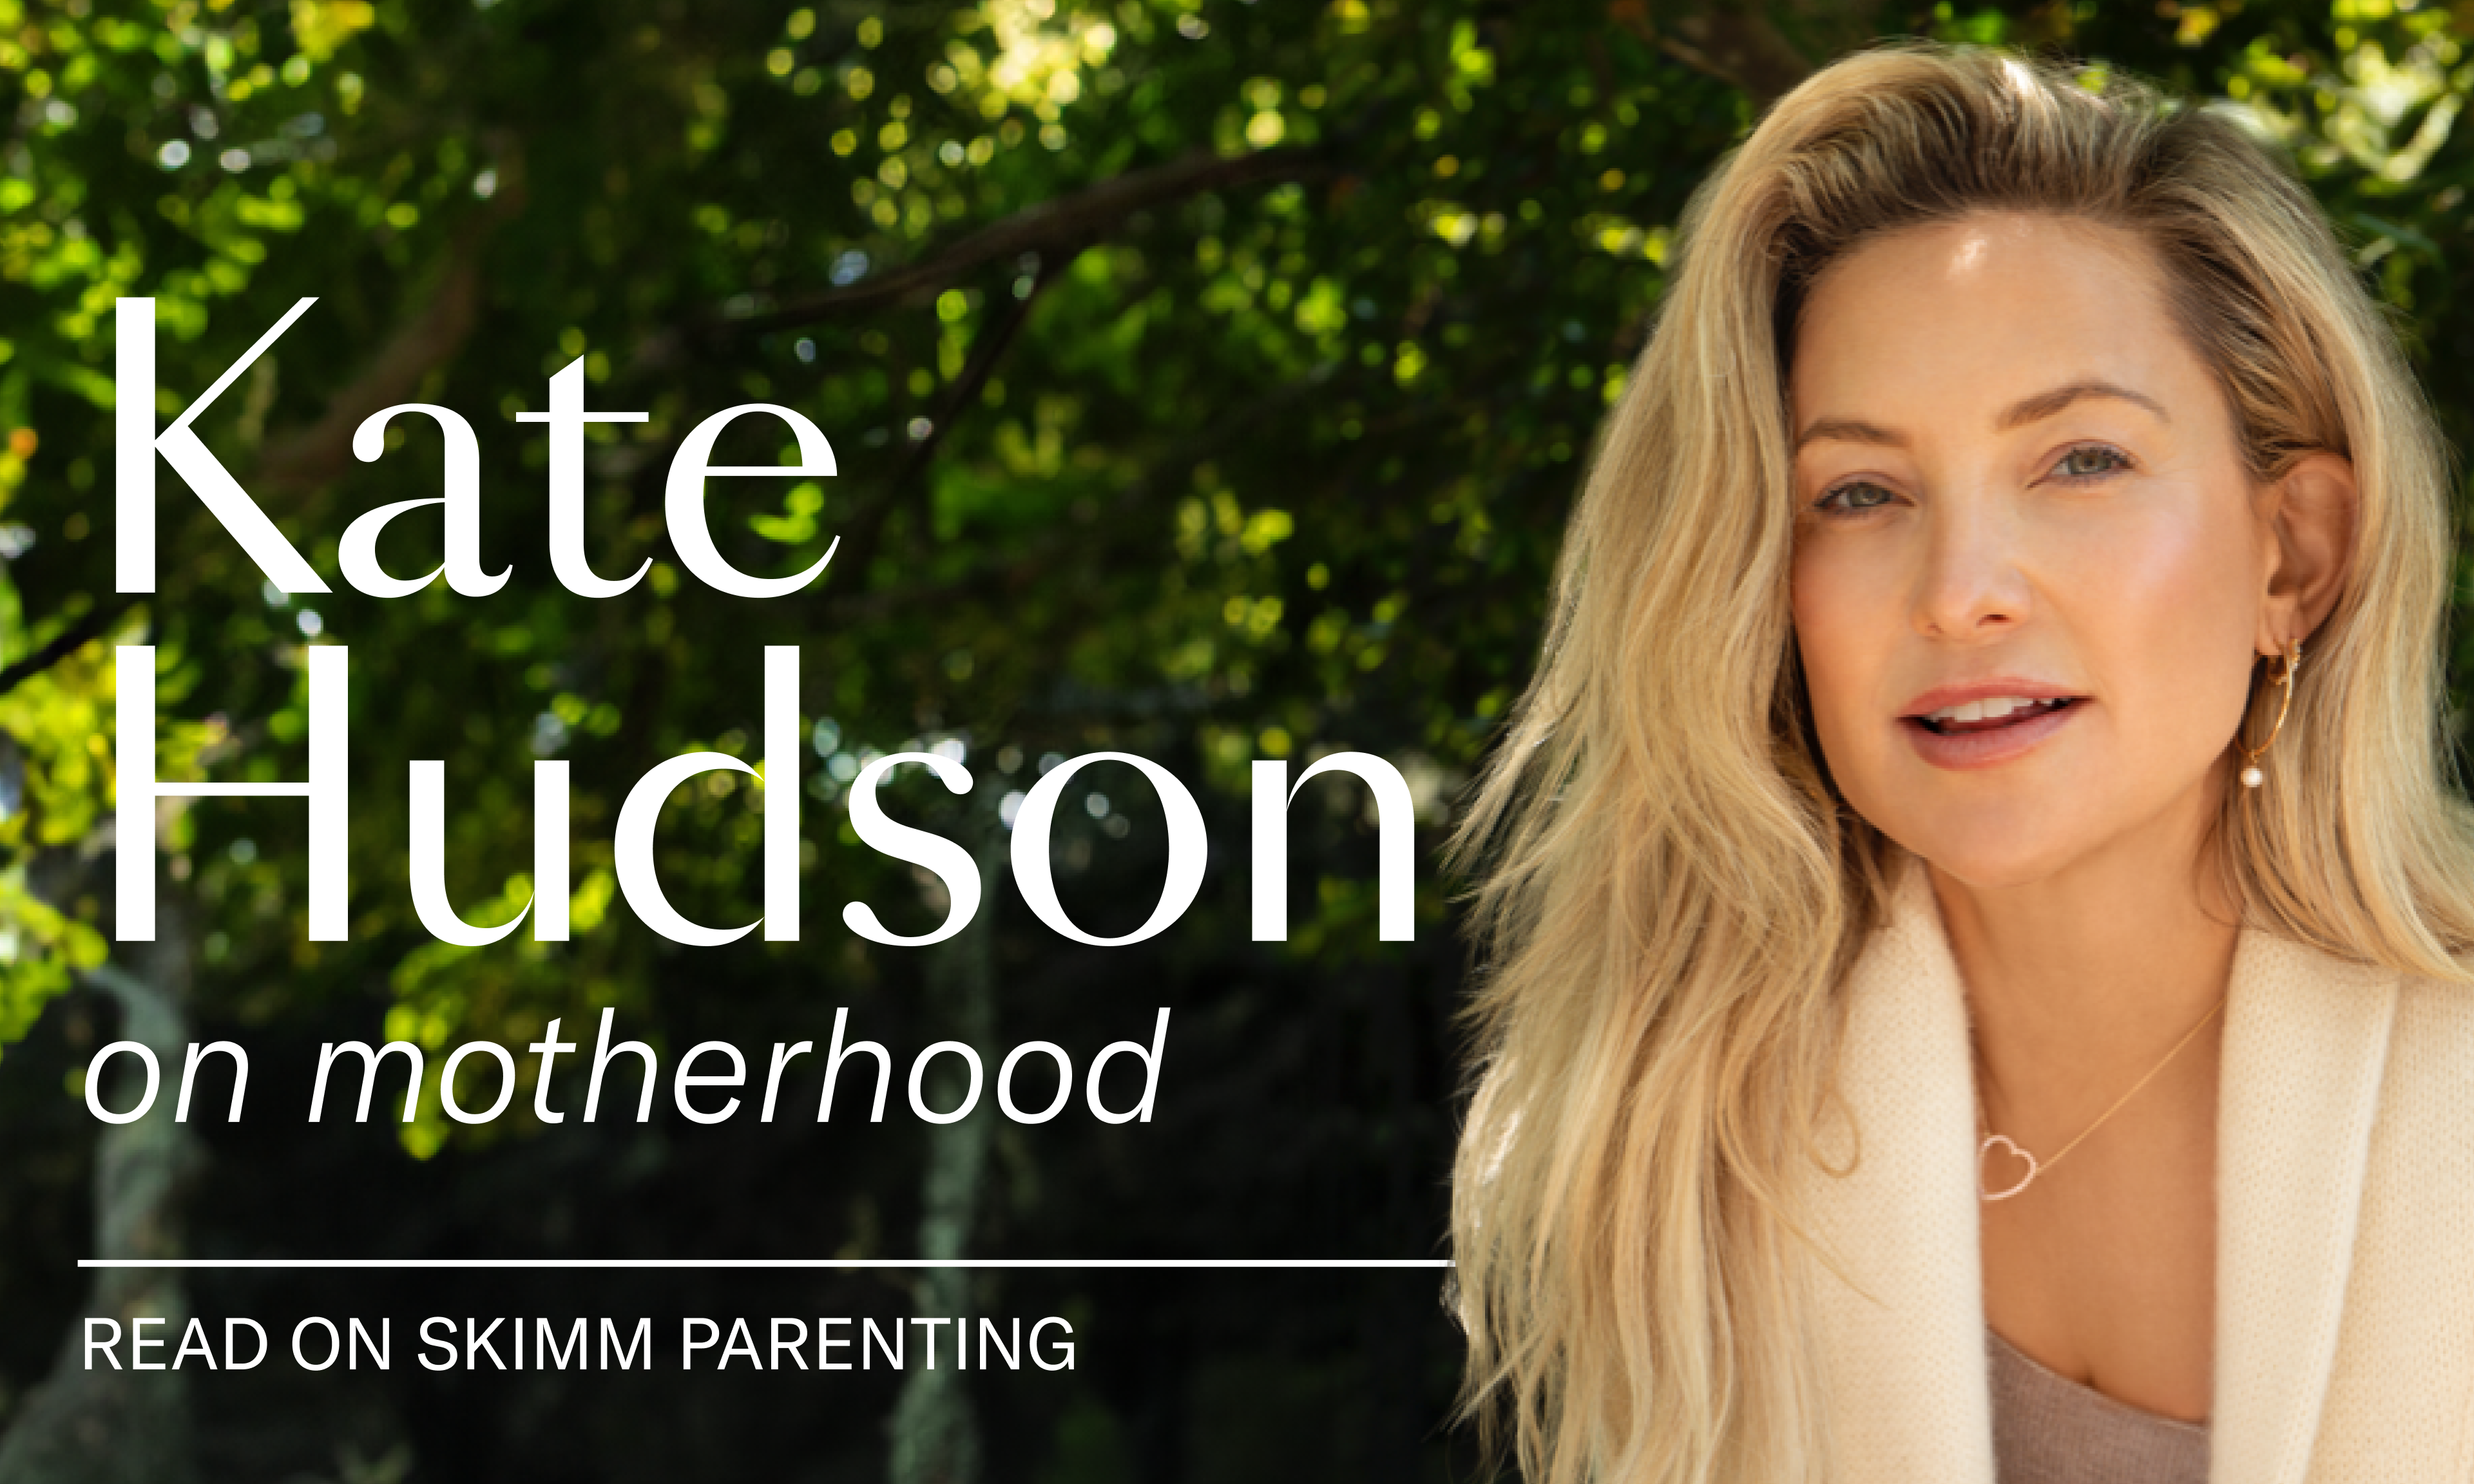 Kate Hudson on motherhood read on skimm parenting